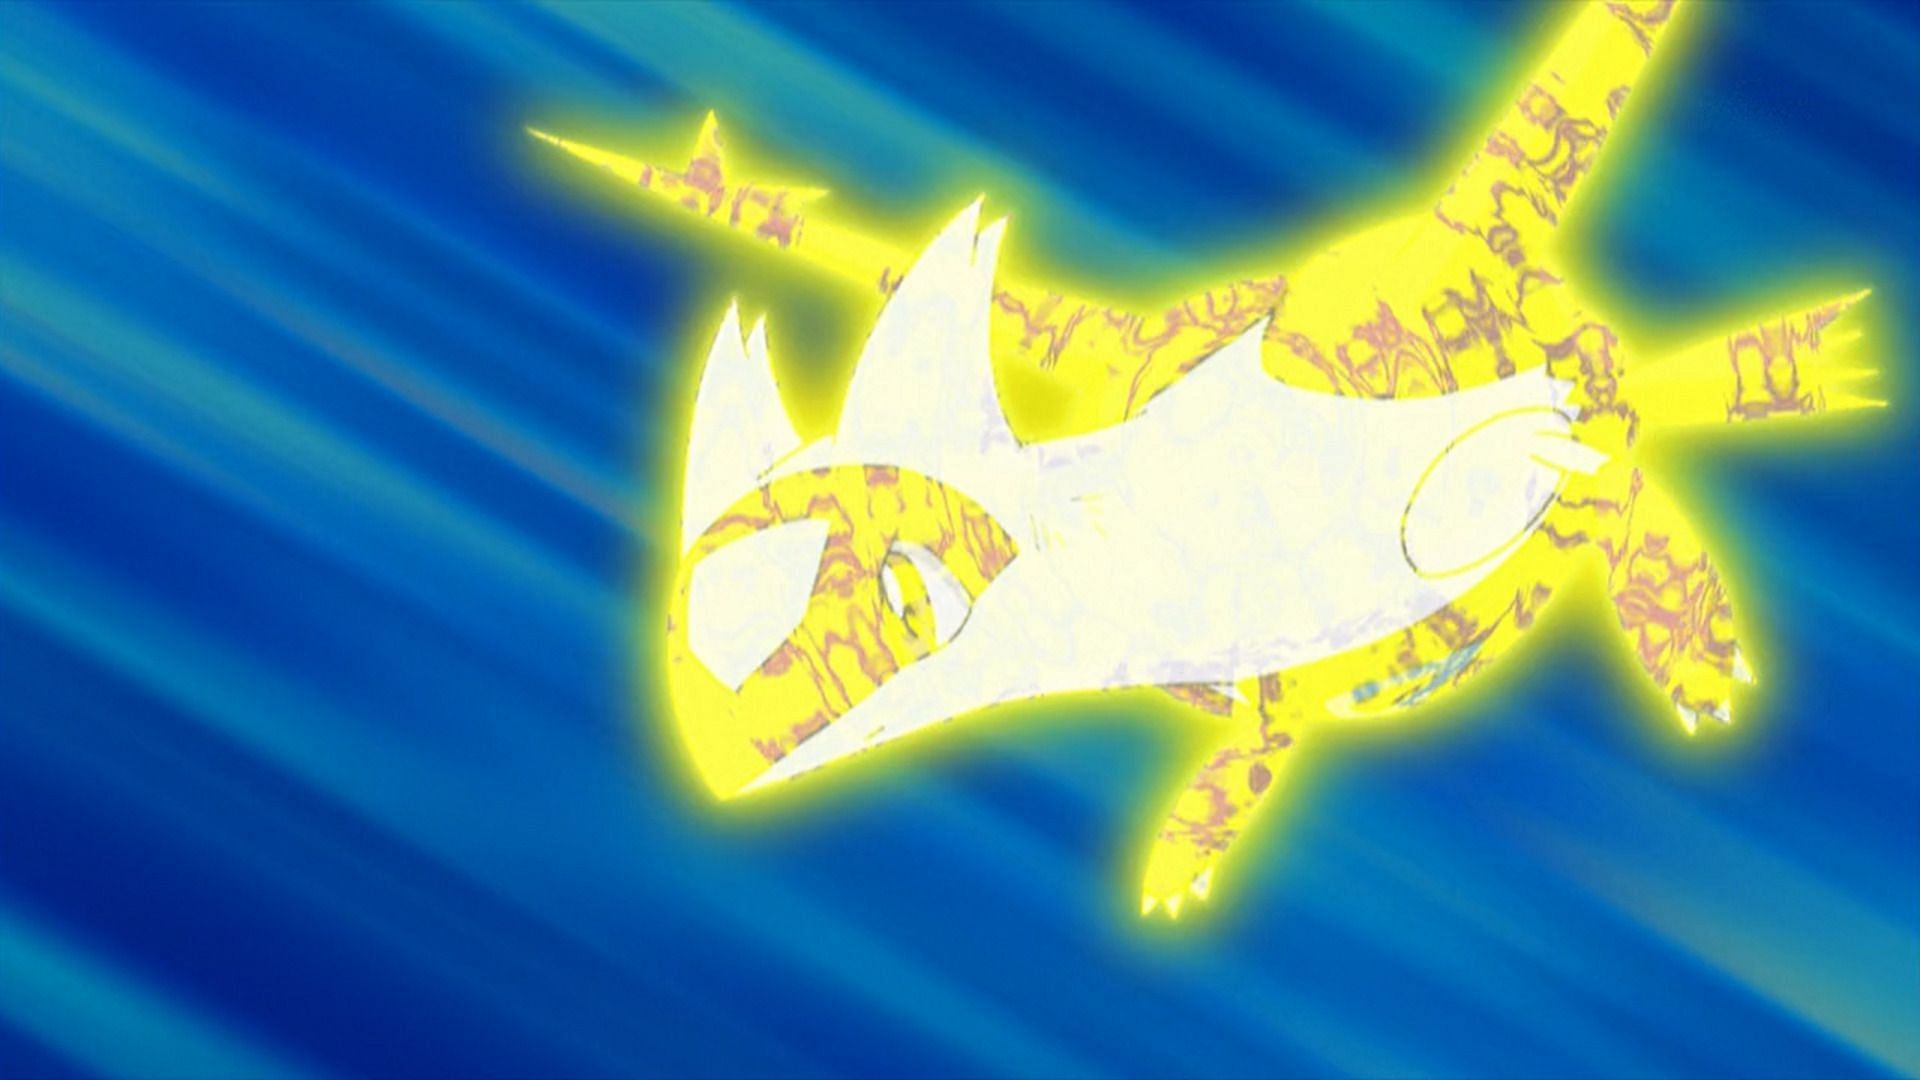 Latias using Recover in the anime (Image via The Pokemon Company)